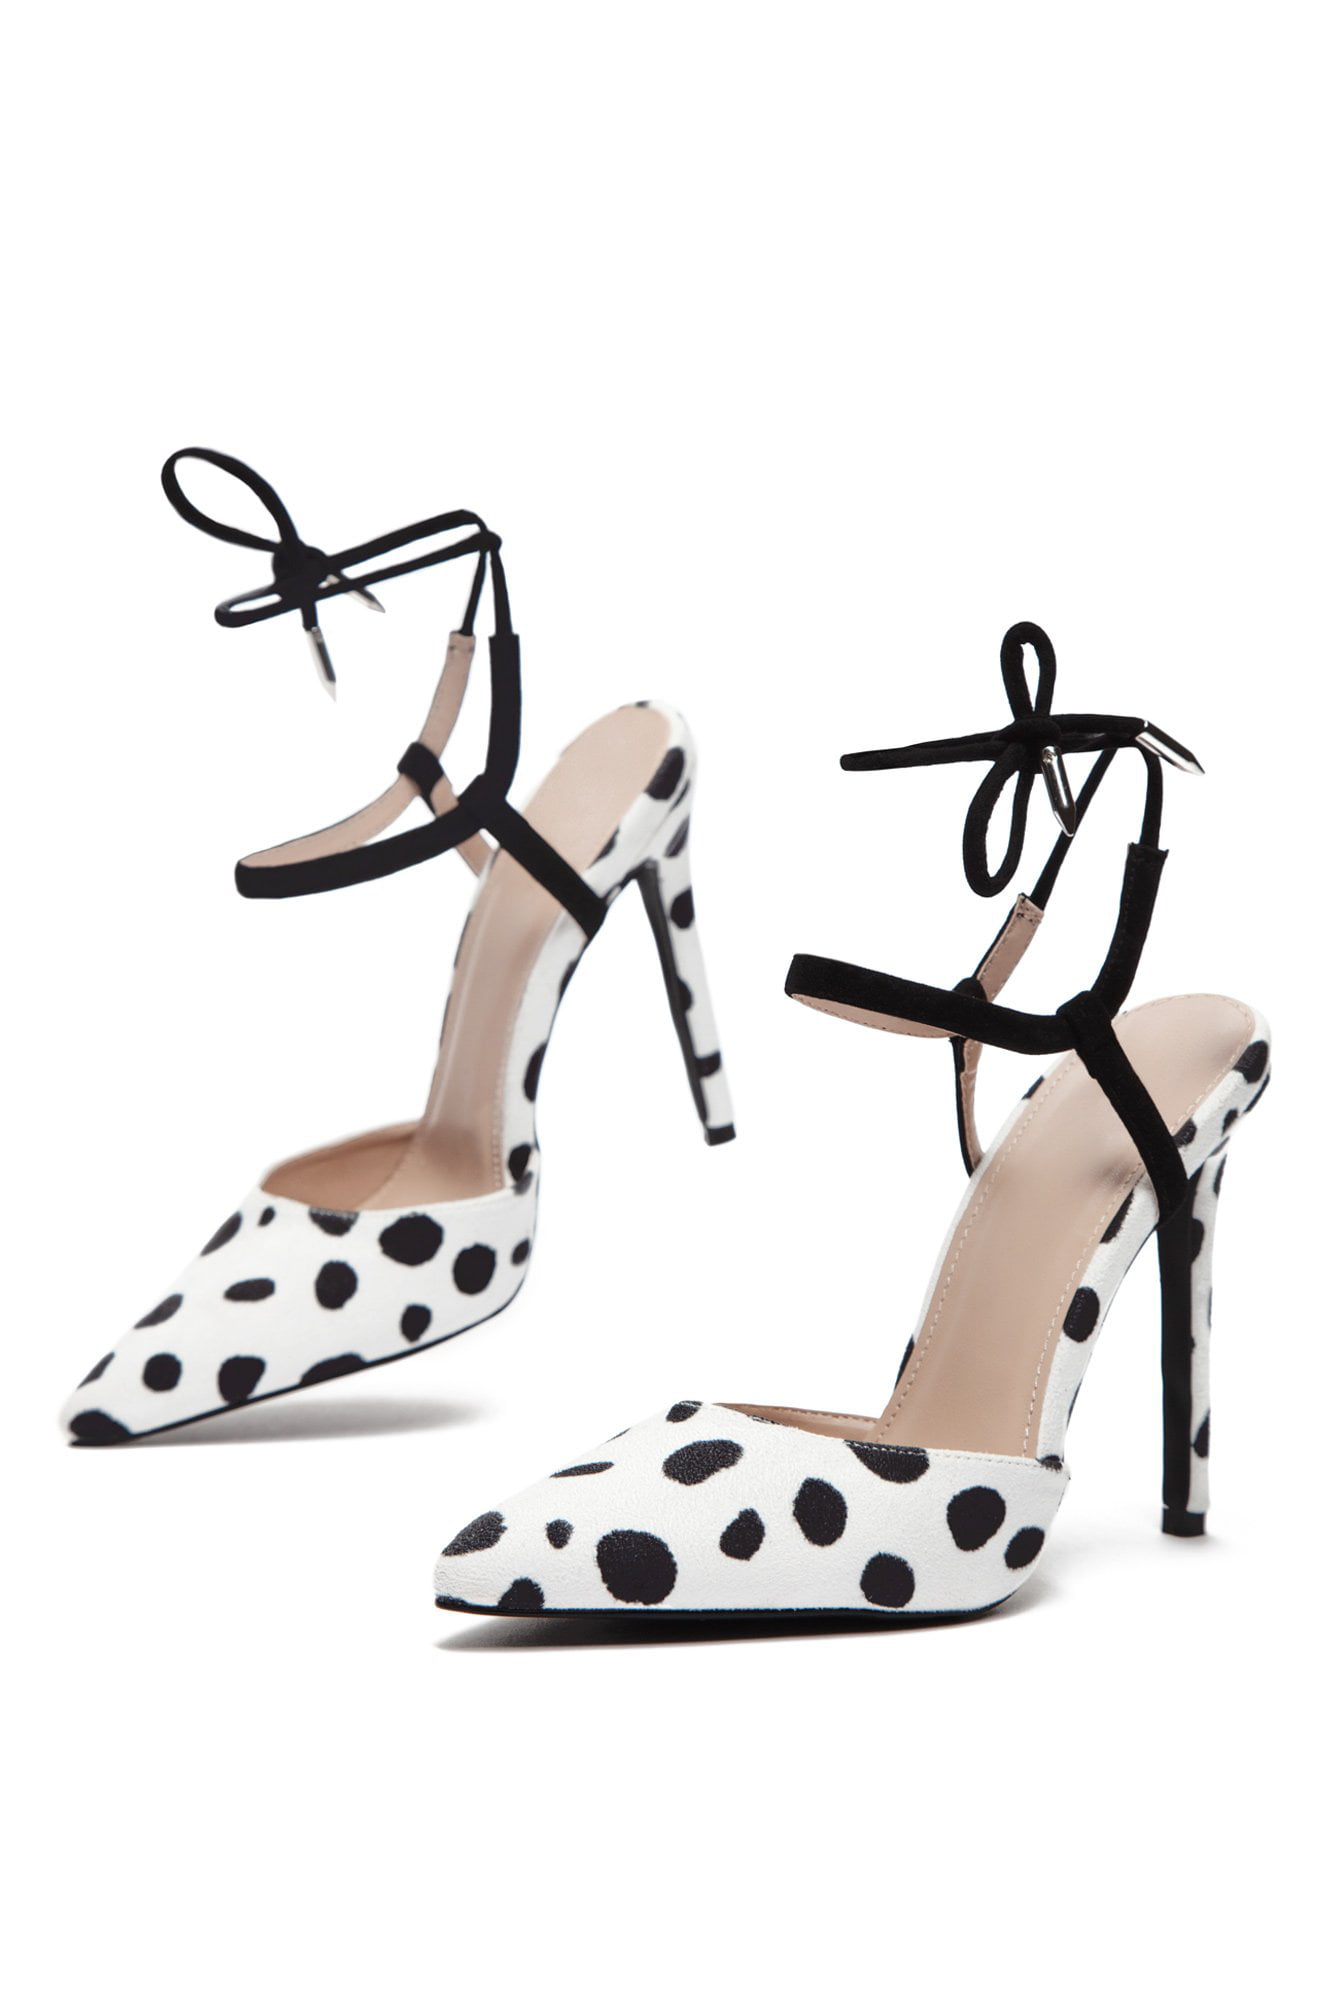 Black Satin Shoe Polka Dot Candy Striped Bow Front Peep 4.5'' Heel 1'' Platform